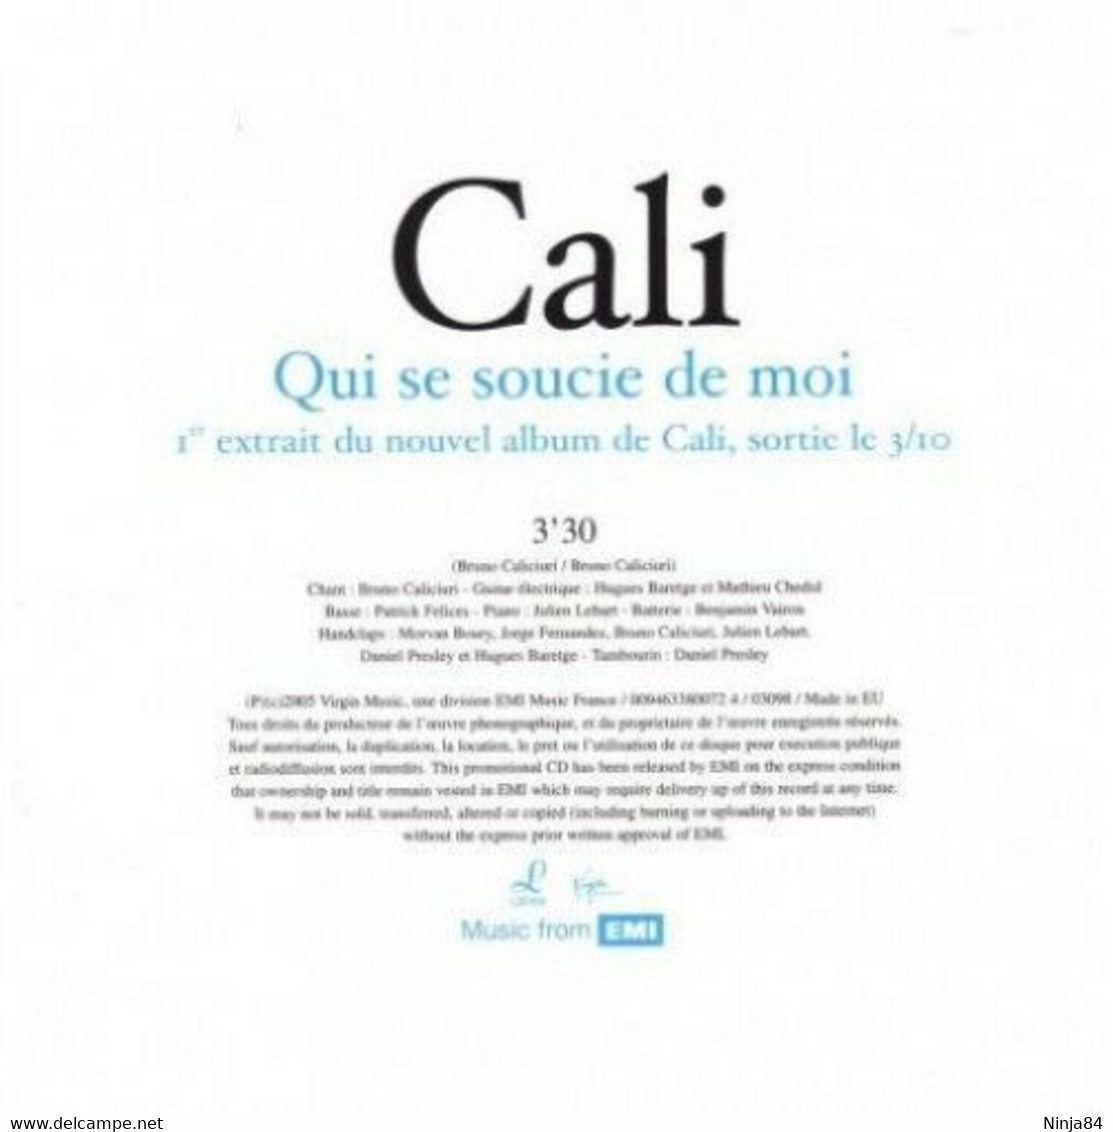 CDS   Cali  "  Qui Se Soucie De Moi  "  Promo  Europe - Collector's Editions